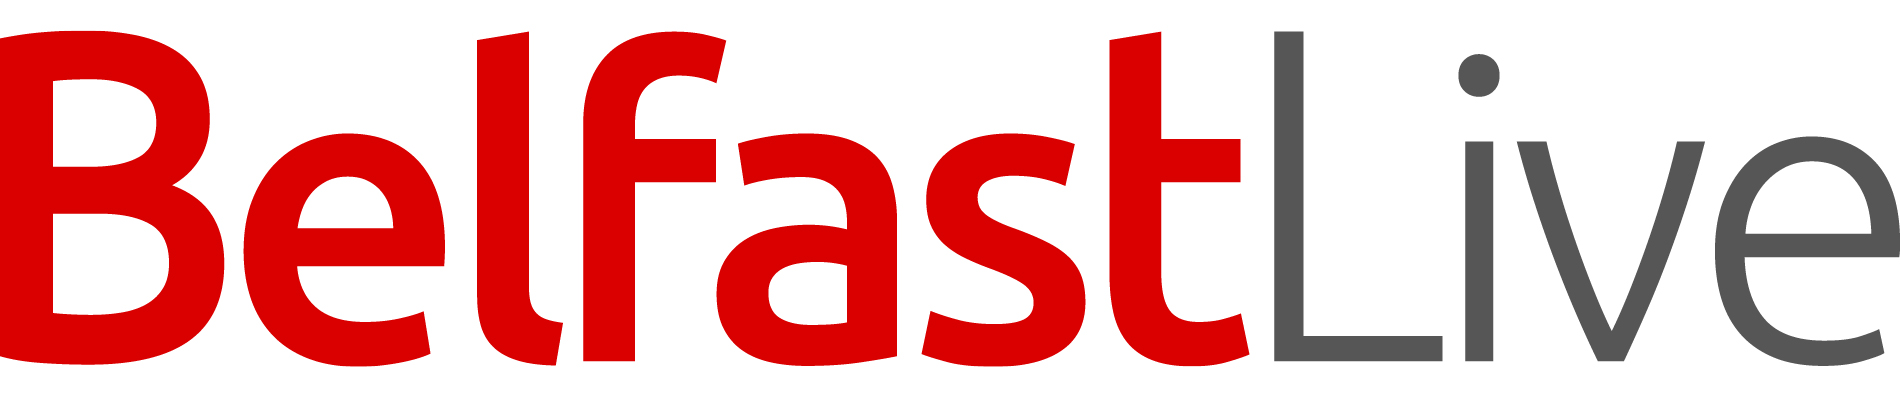 belfast-live-logo.jpg